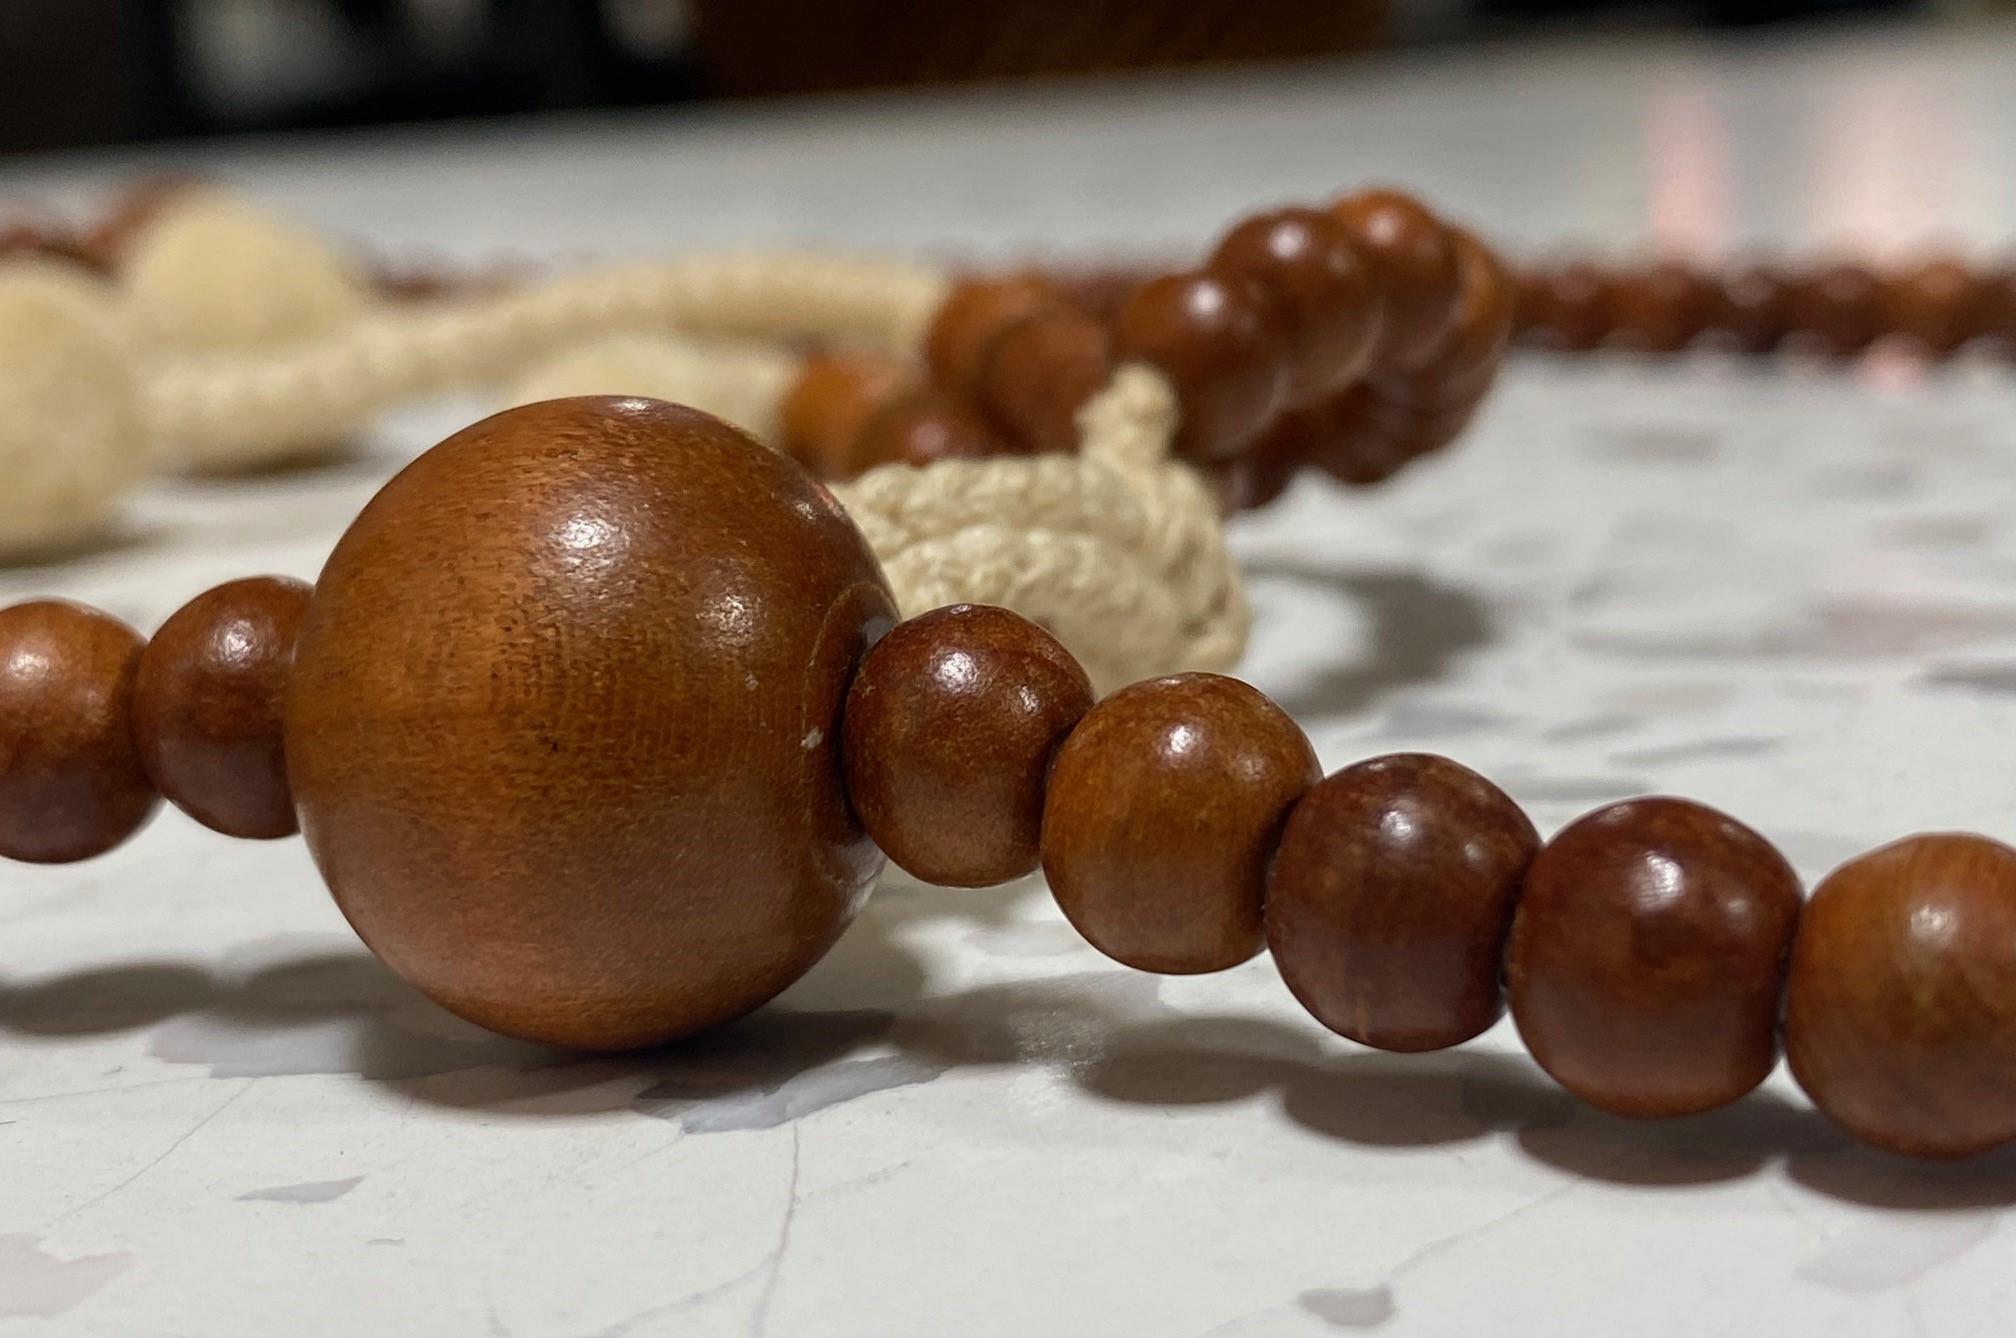 Japanese Temple Shrine Buddhist Monk Juzu Prayer Wood Beads Mala Rosary Necklace For Sale 1